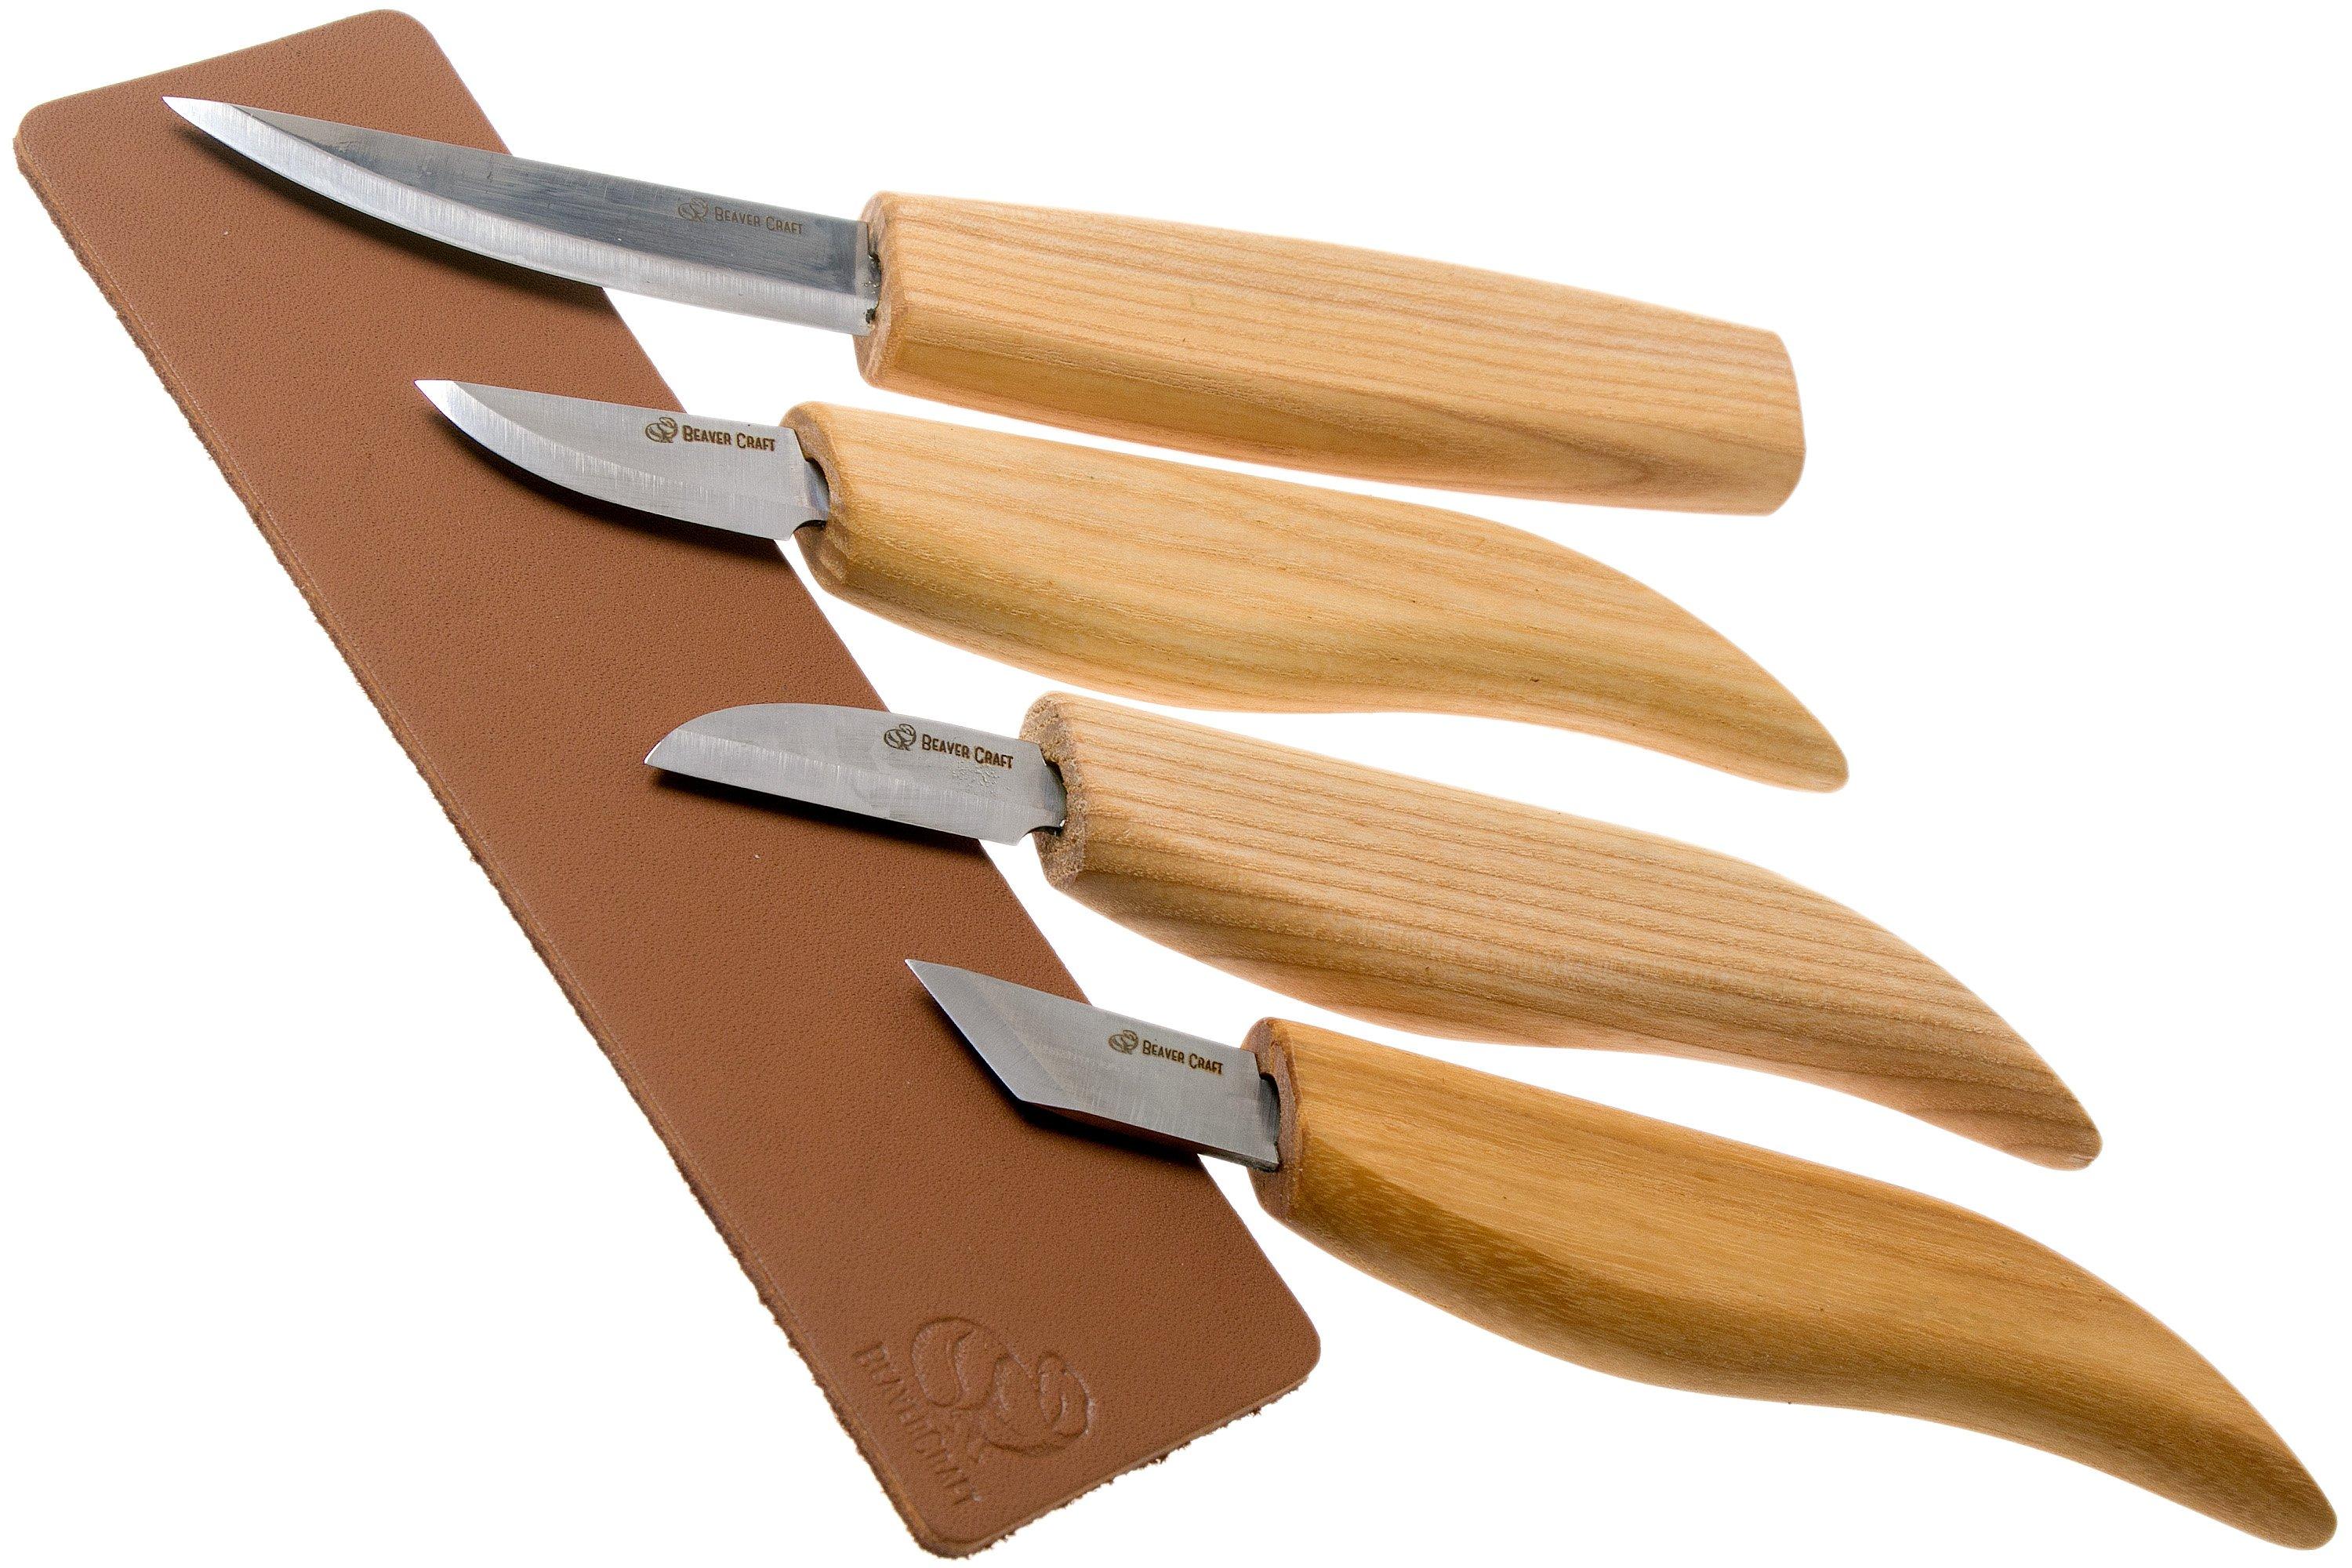 BeaverCraft Basic Set of 4 Knives S07 Book wood carving set with